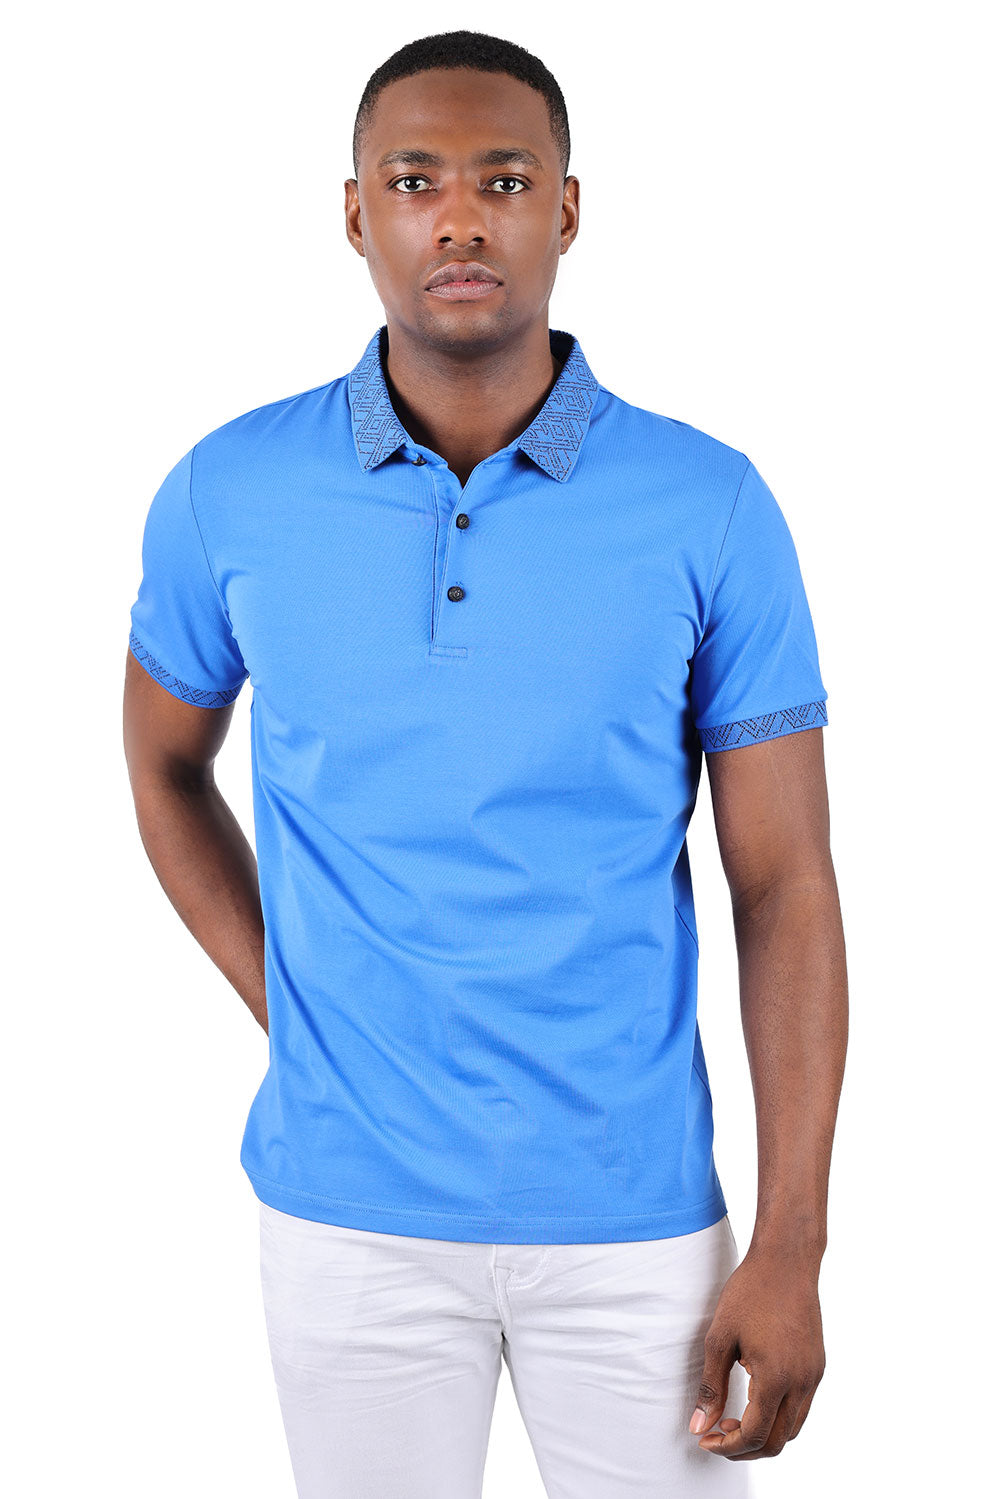 Barabas Men's Collar Pattern Short Sleeve Solid Color Shirts 3P01 Royal